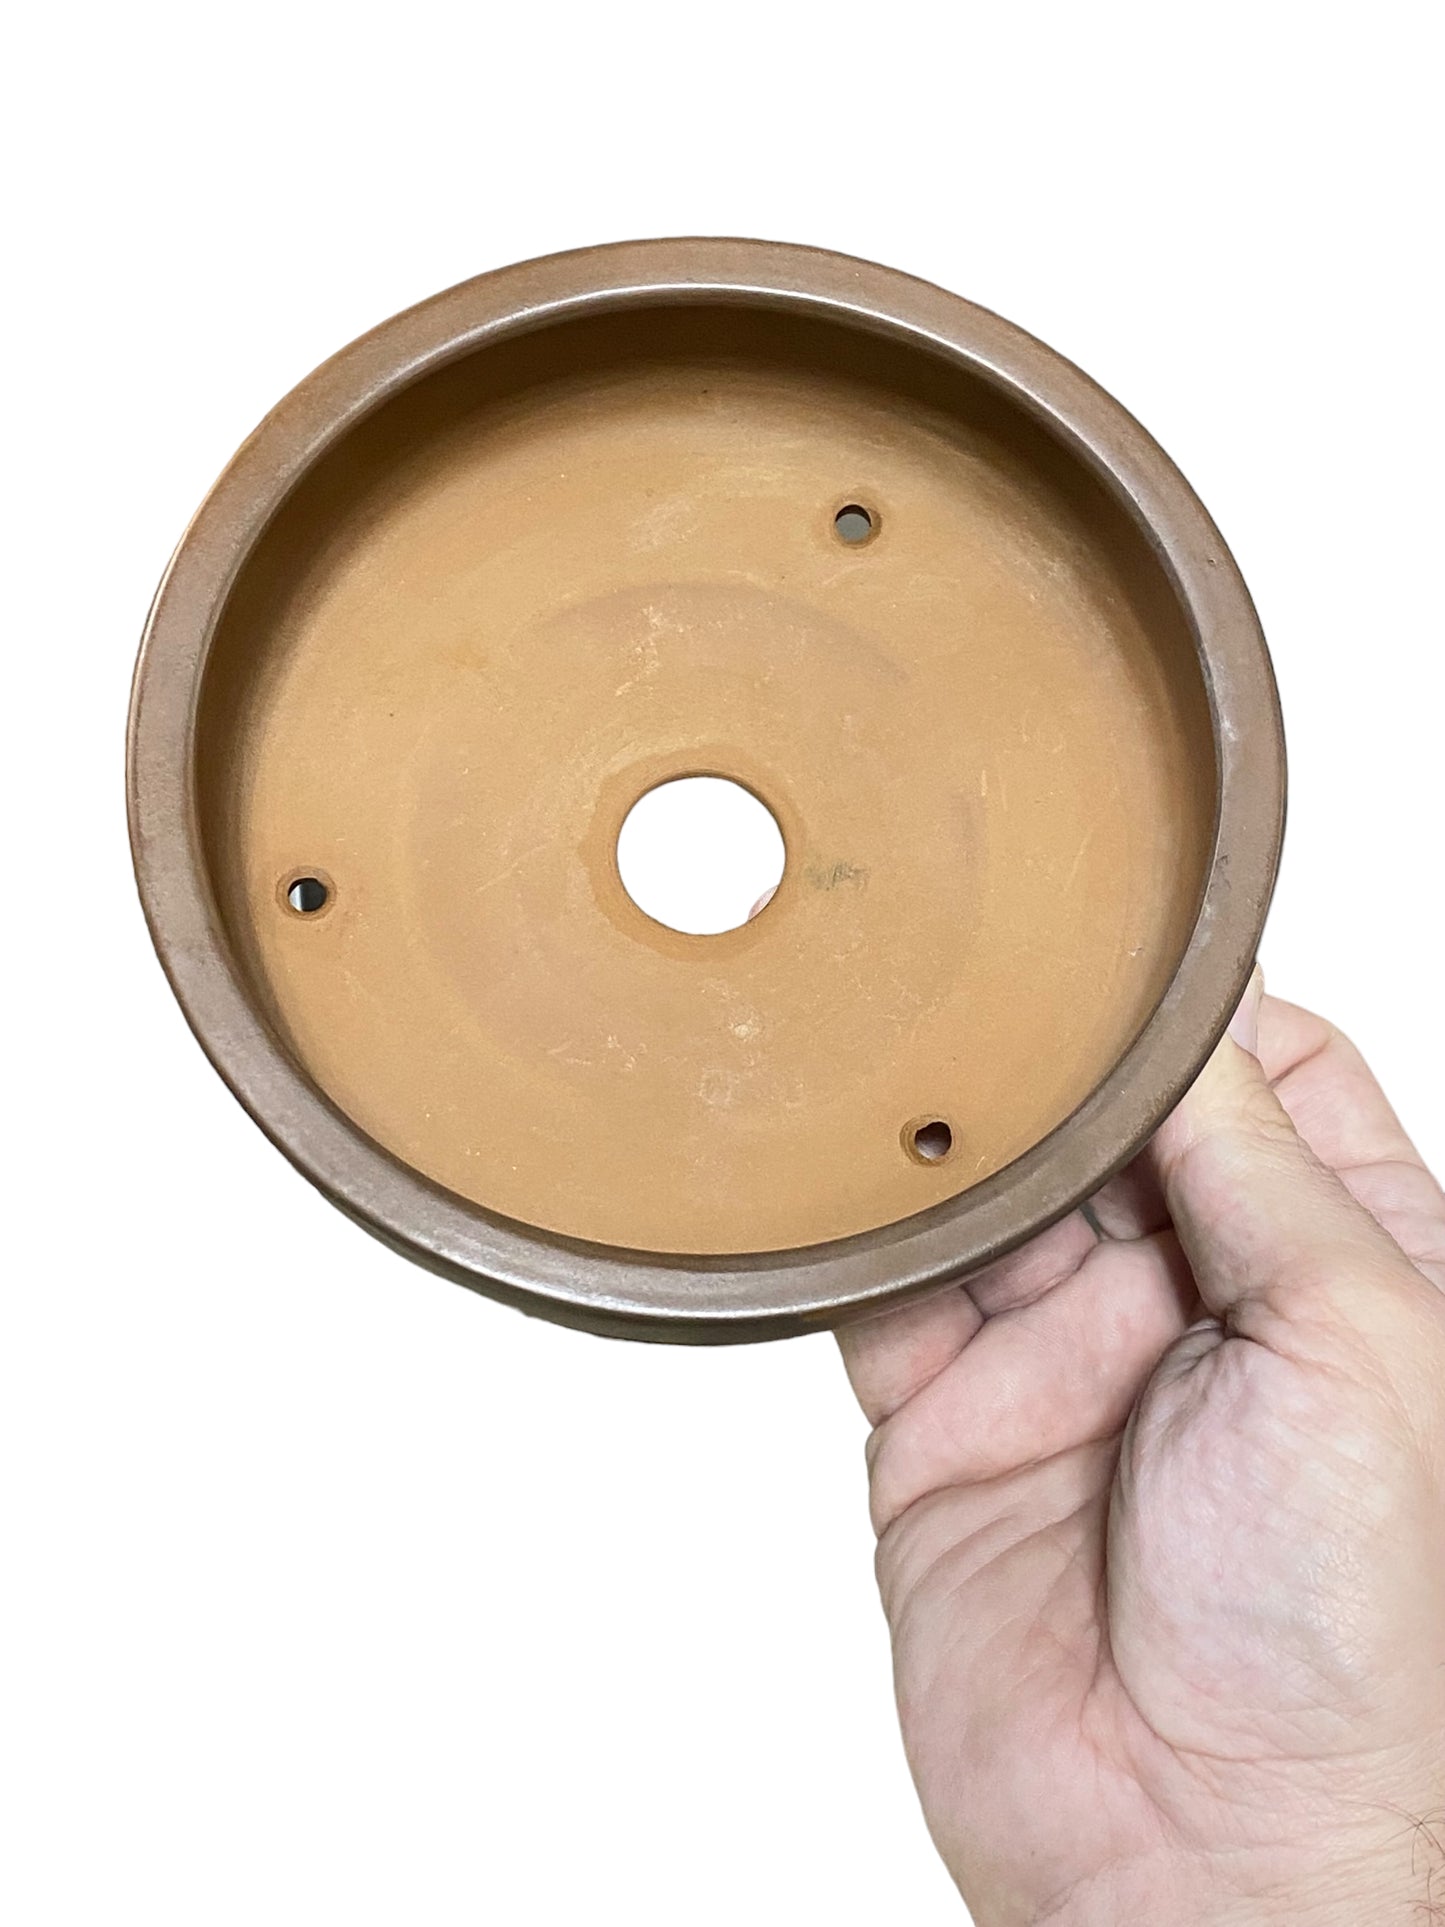 Bigei - Relief Carved Round Style Bonsai Pot